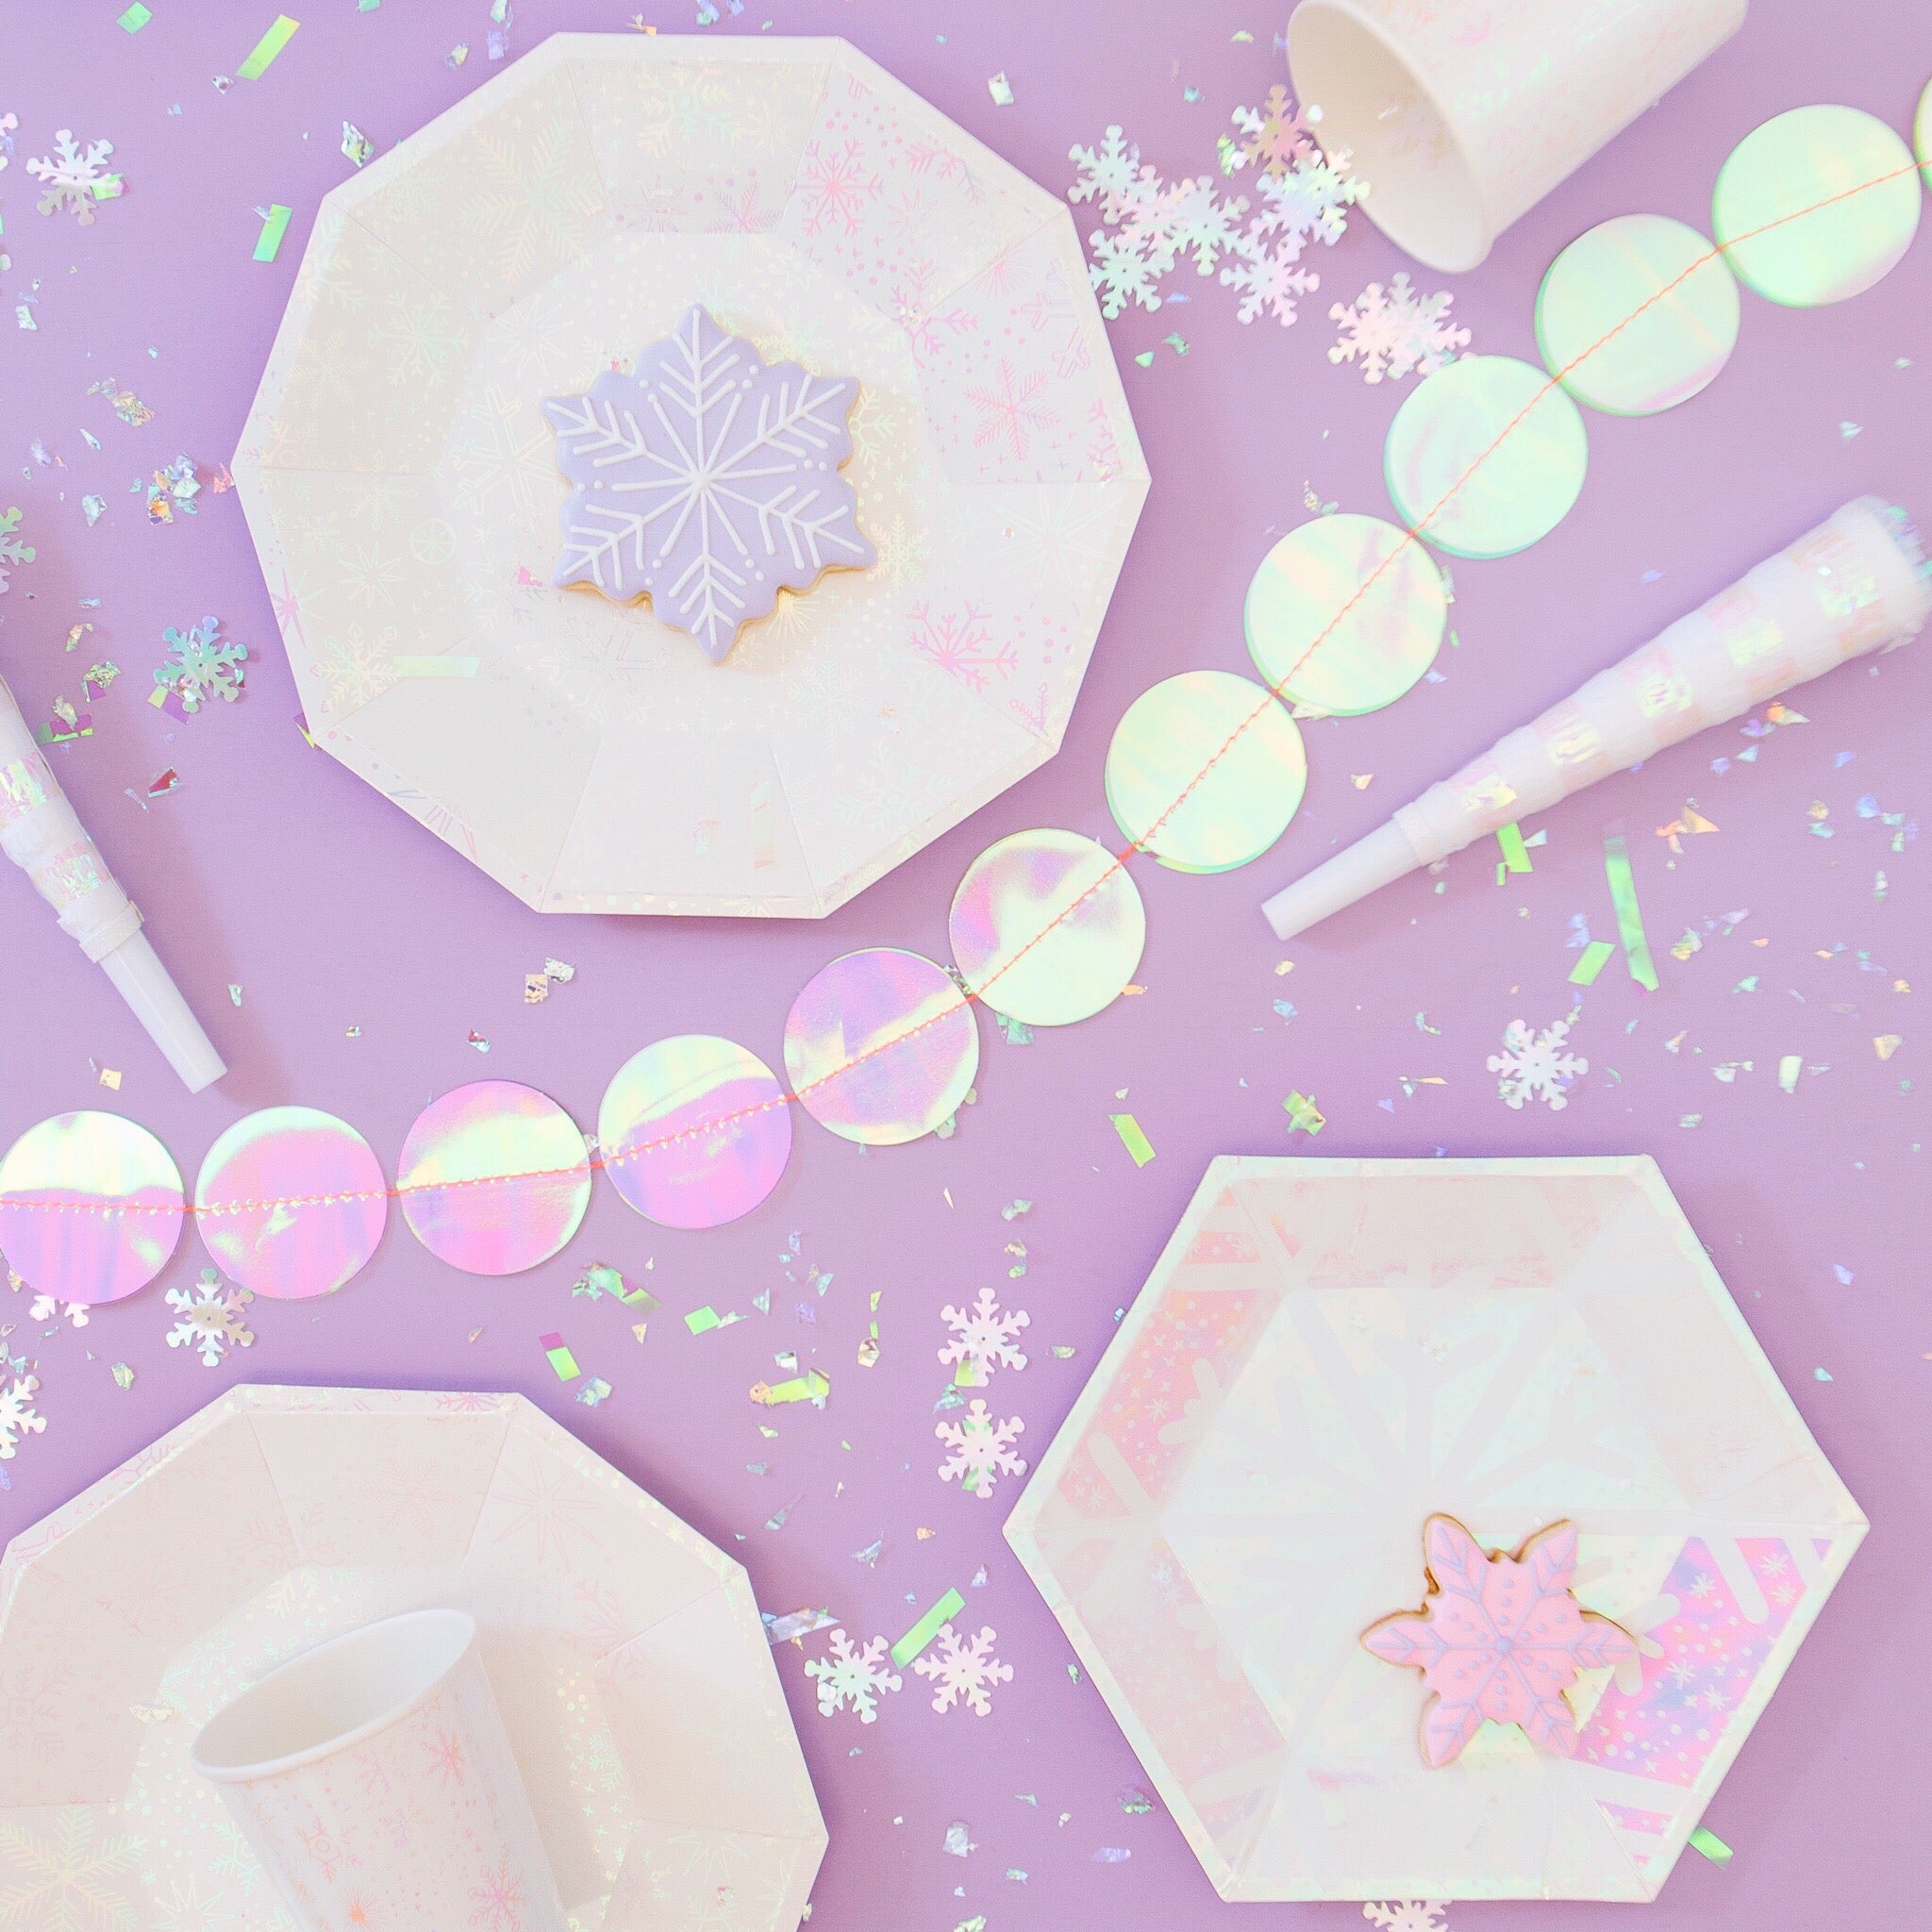 Iridescent Snowflake Plates | www.sprinklebeesweet.com